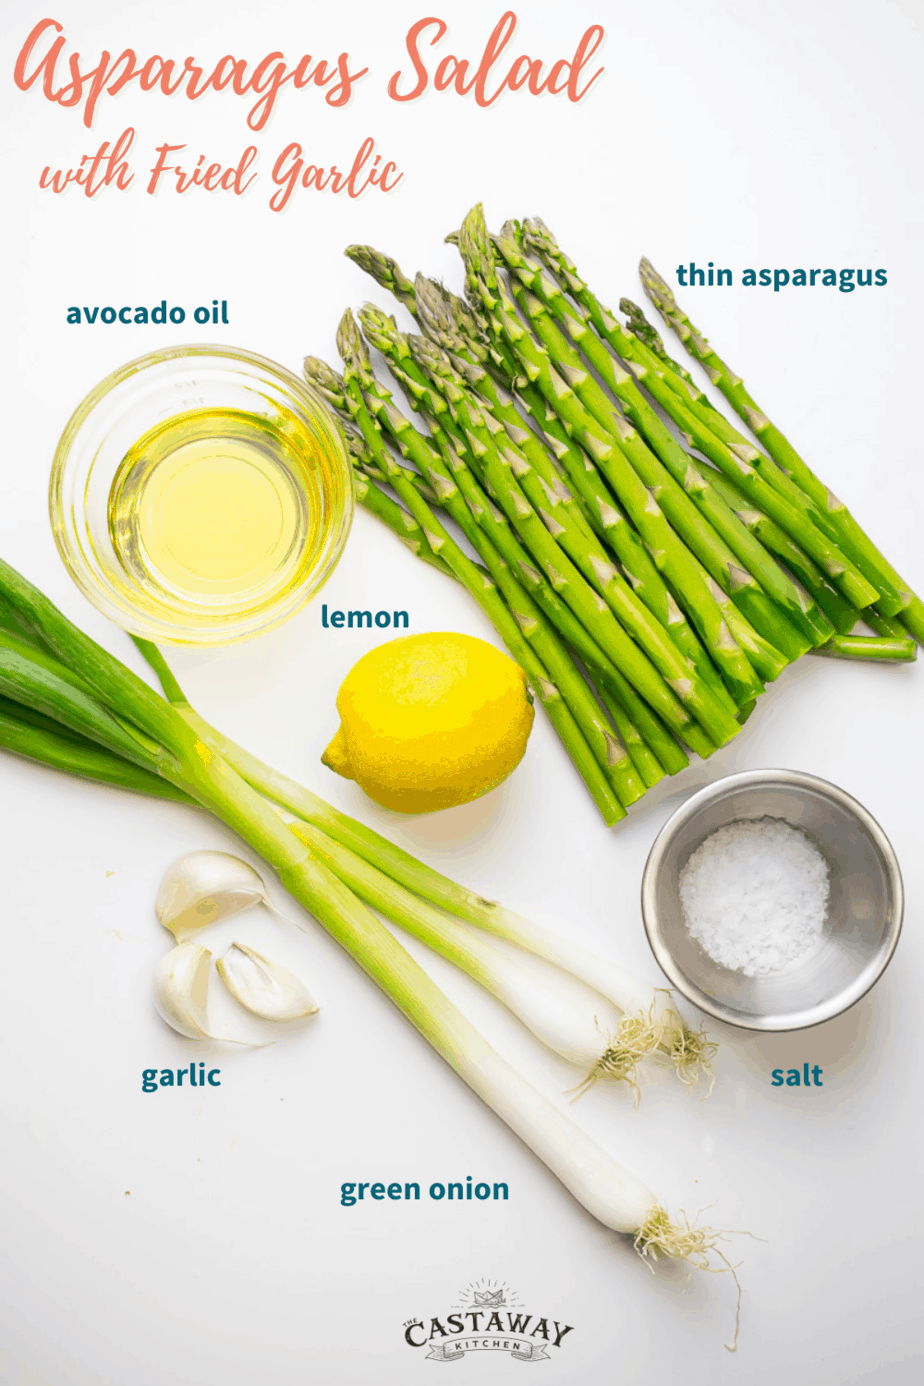 AIP asparagus salad ingredients laid out on table; garlic, green onion, salt, lemon, asparagus, avocado oil 